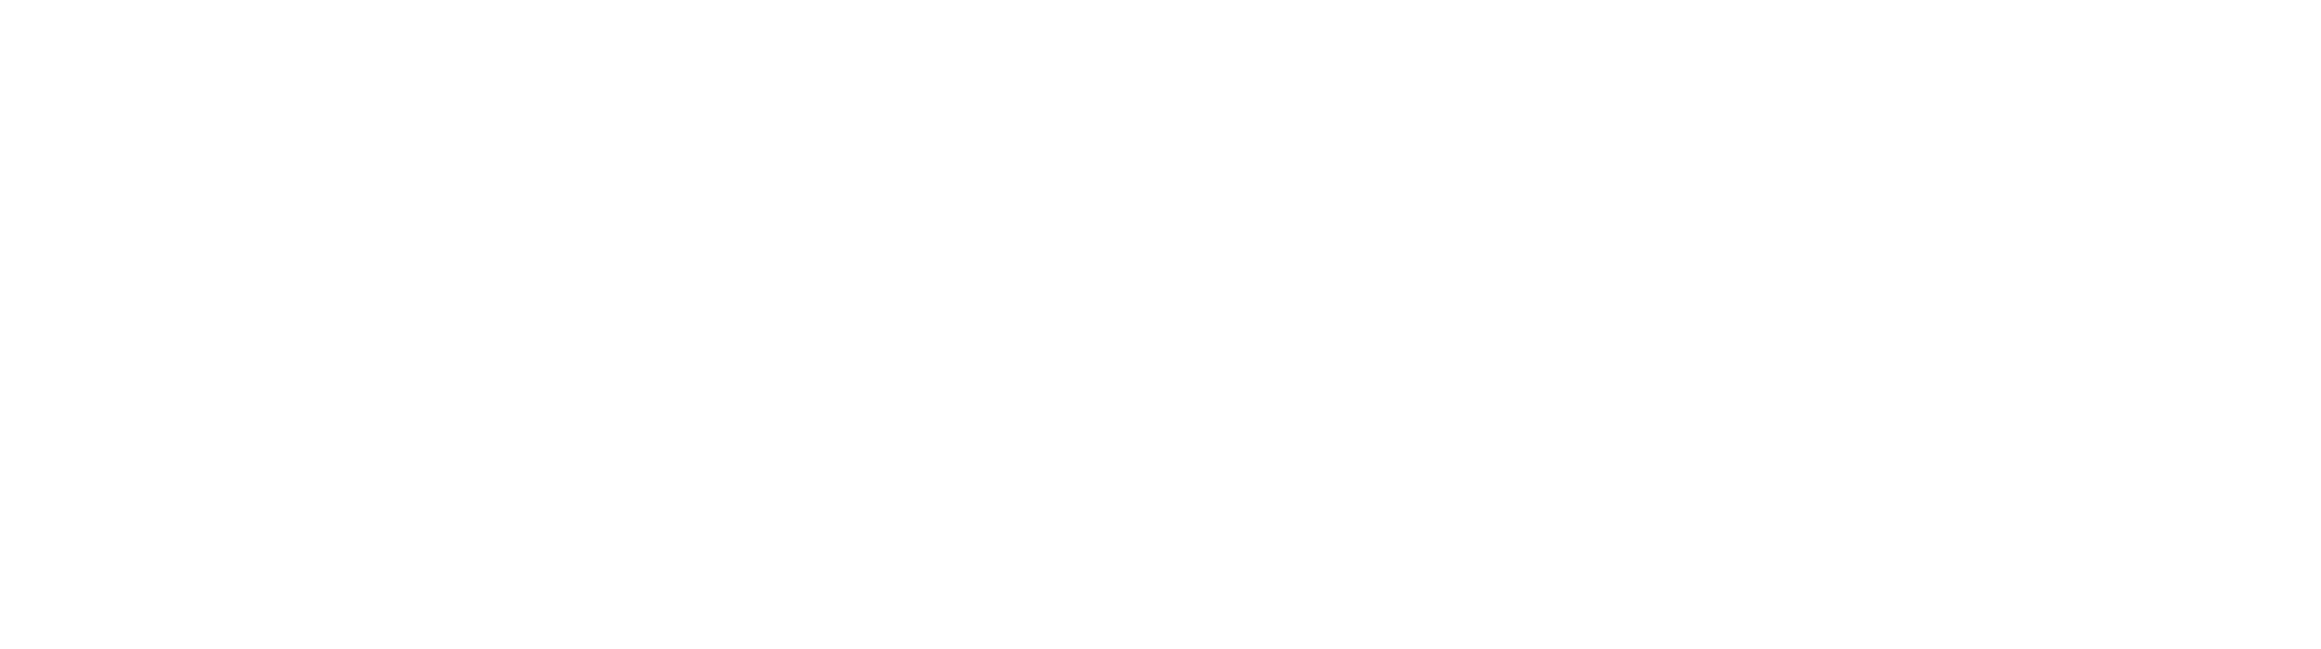 Arthur J Bruckheim Ph.D Consulting Services